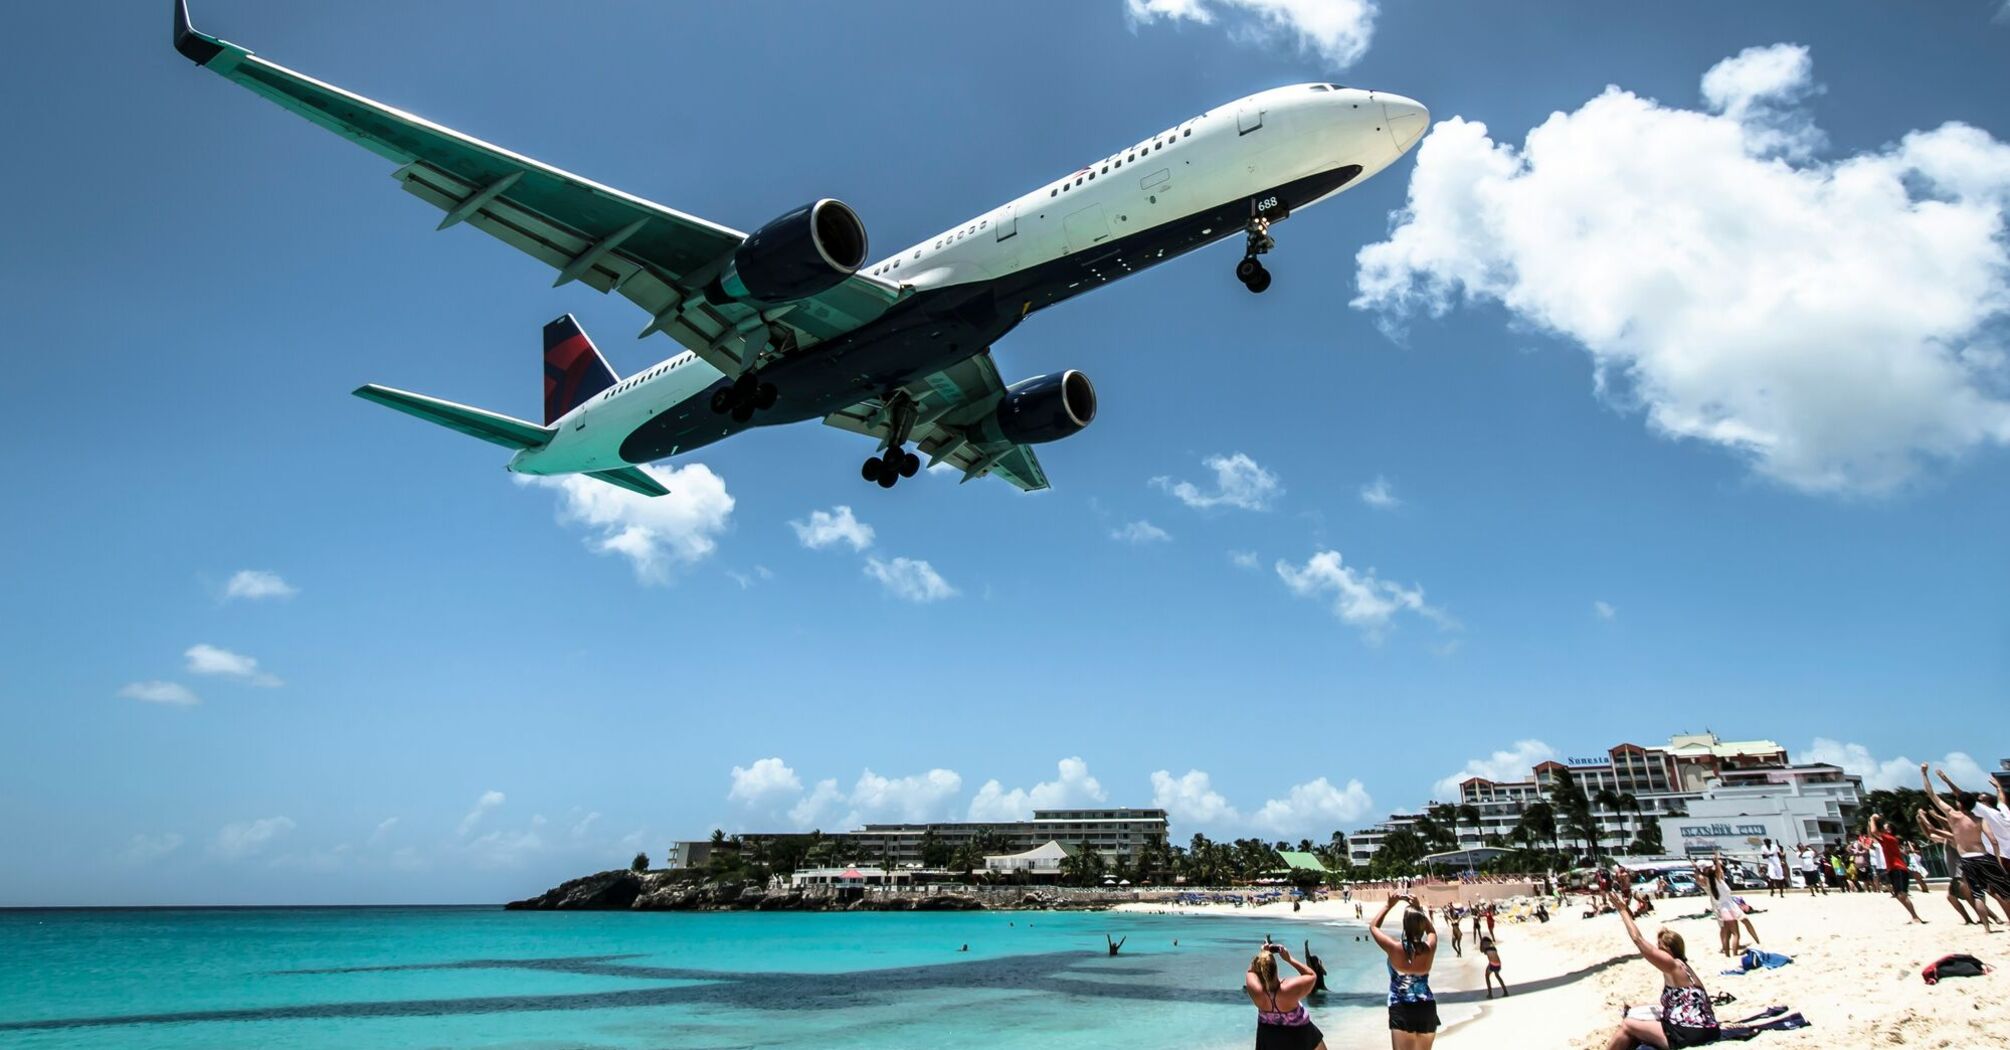 delta airlines plane landing near seashore during daytime